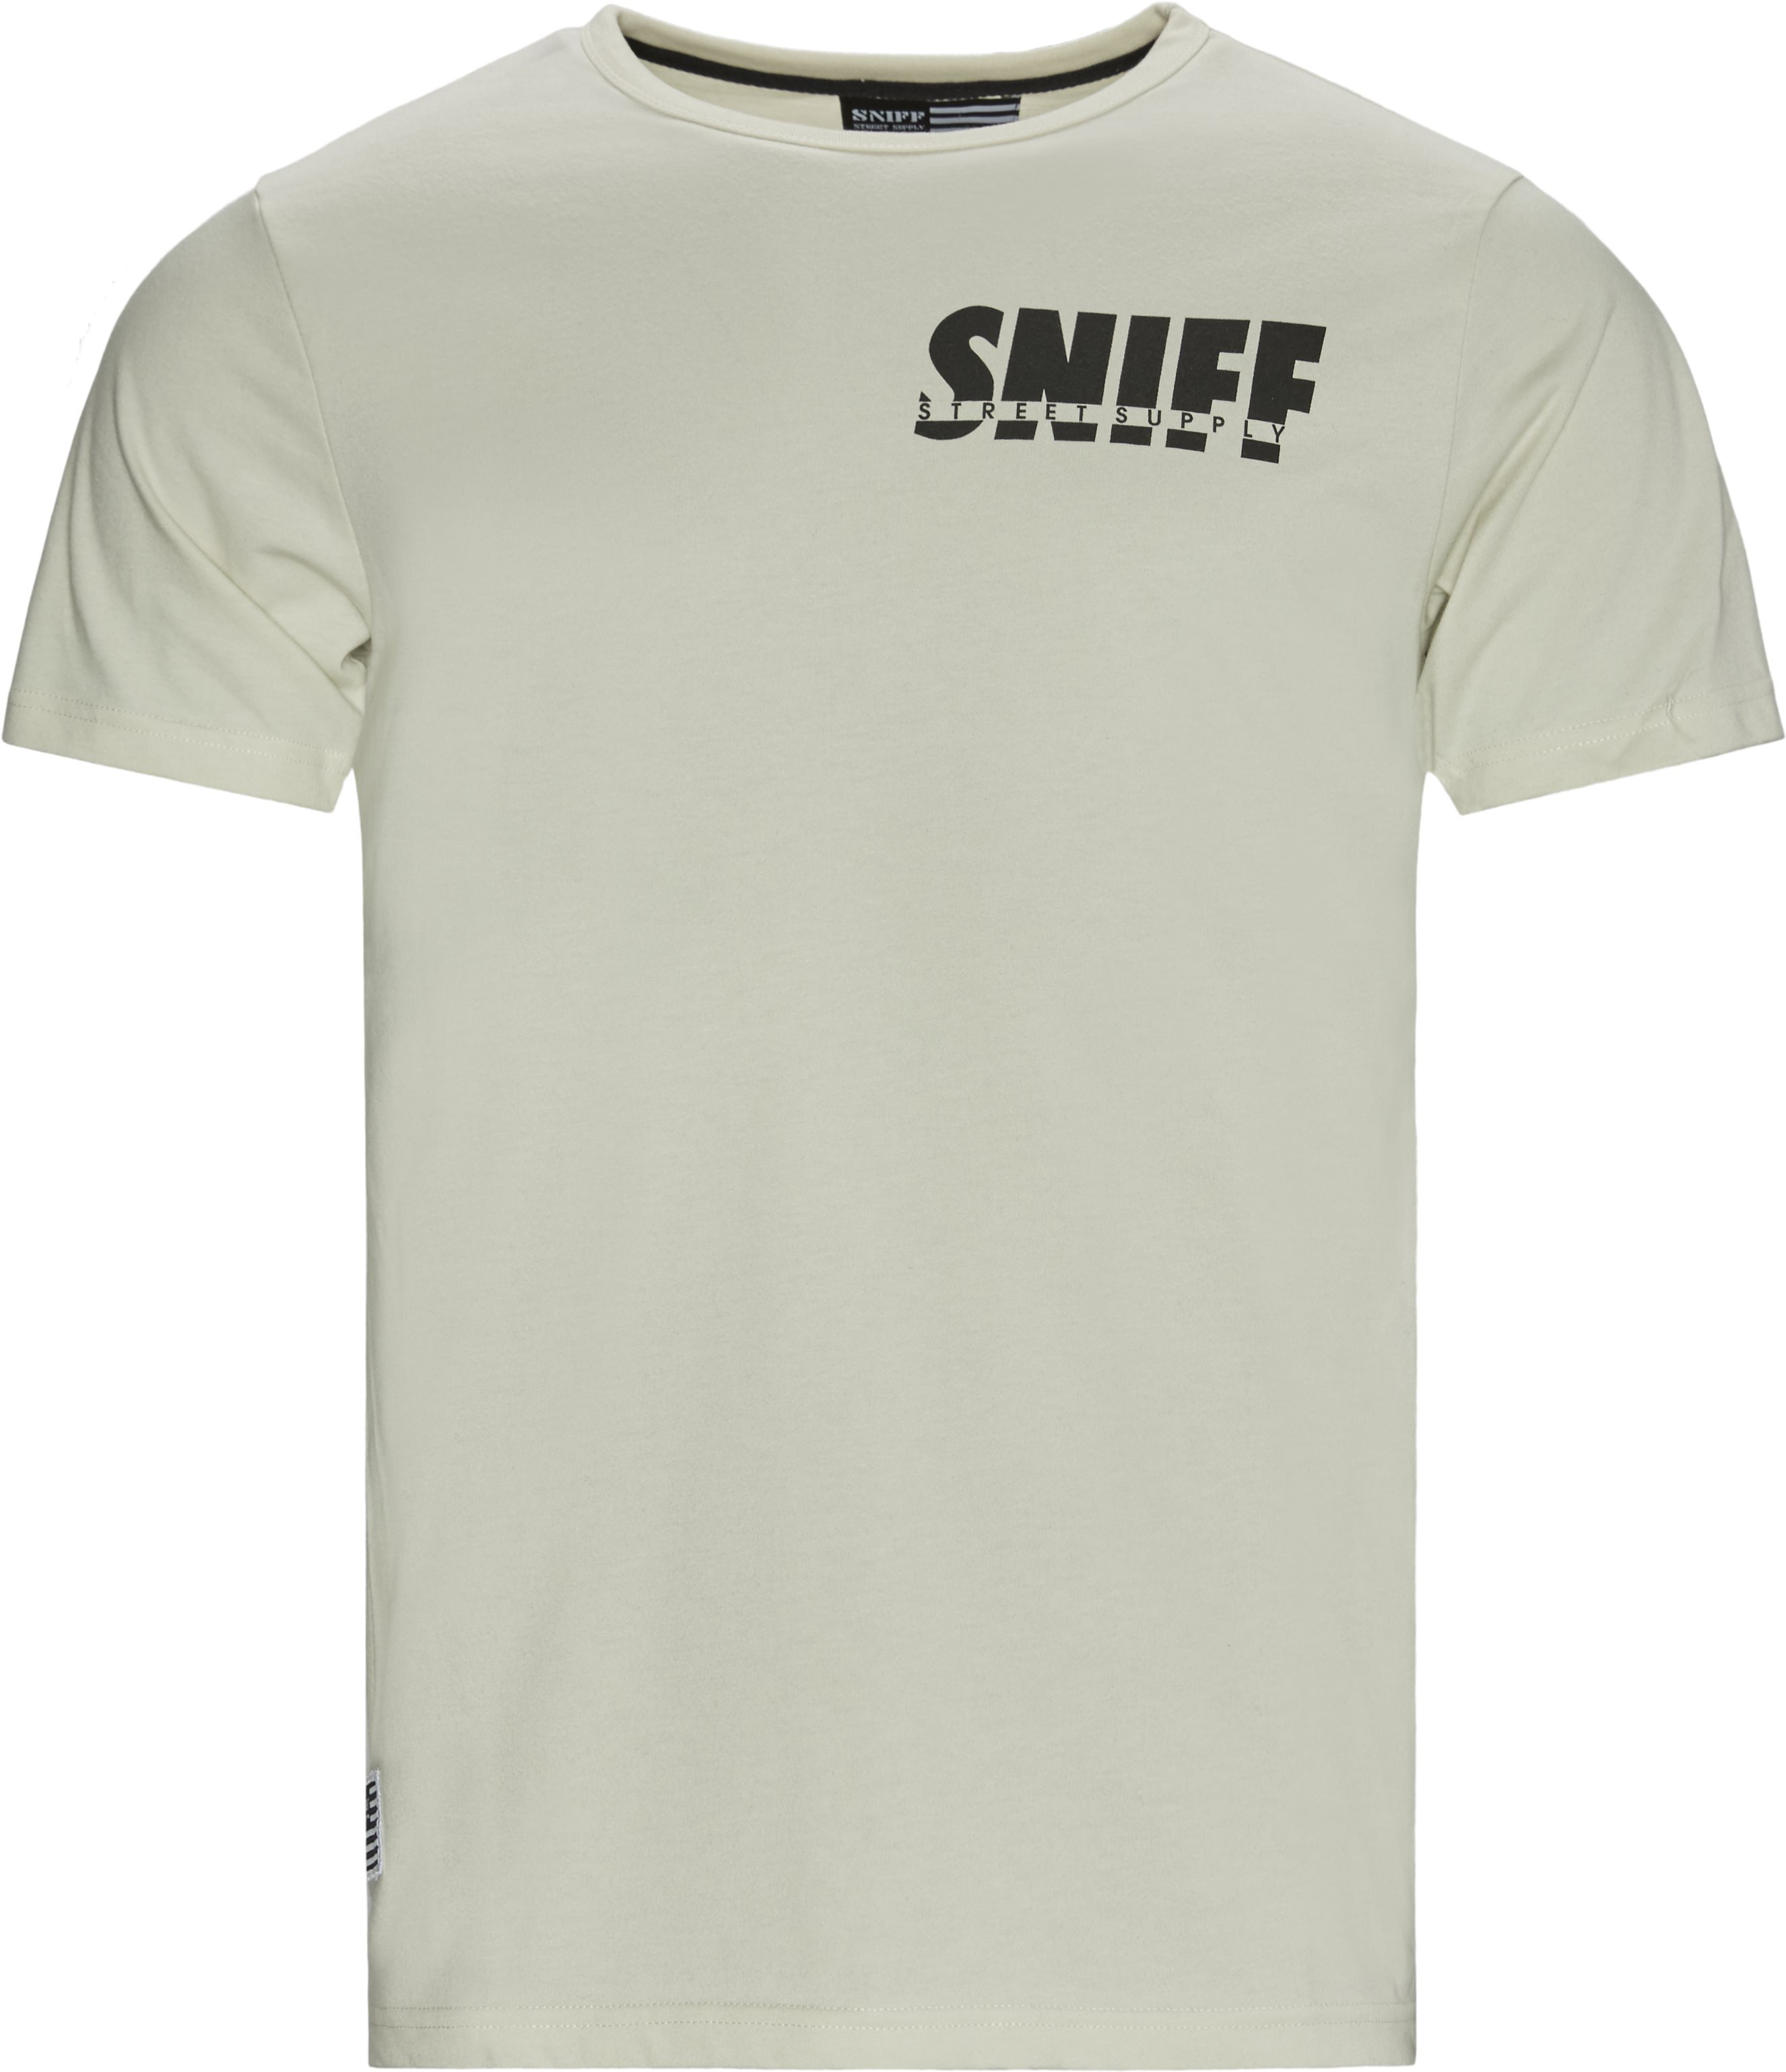 Smokey Tee - T-shirts - Regular fit - Sand